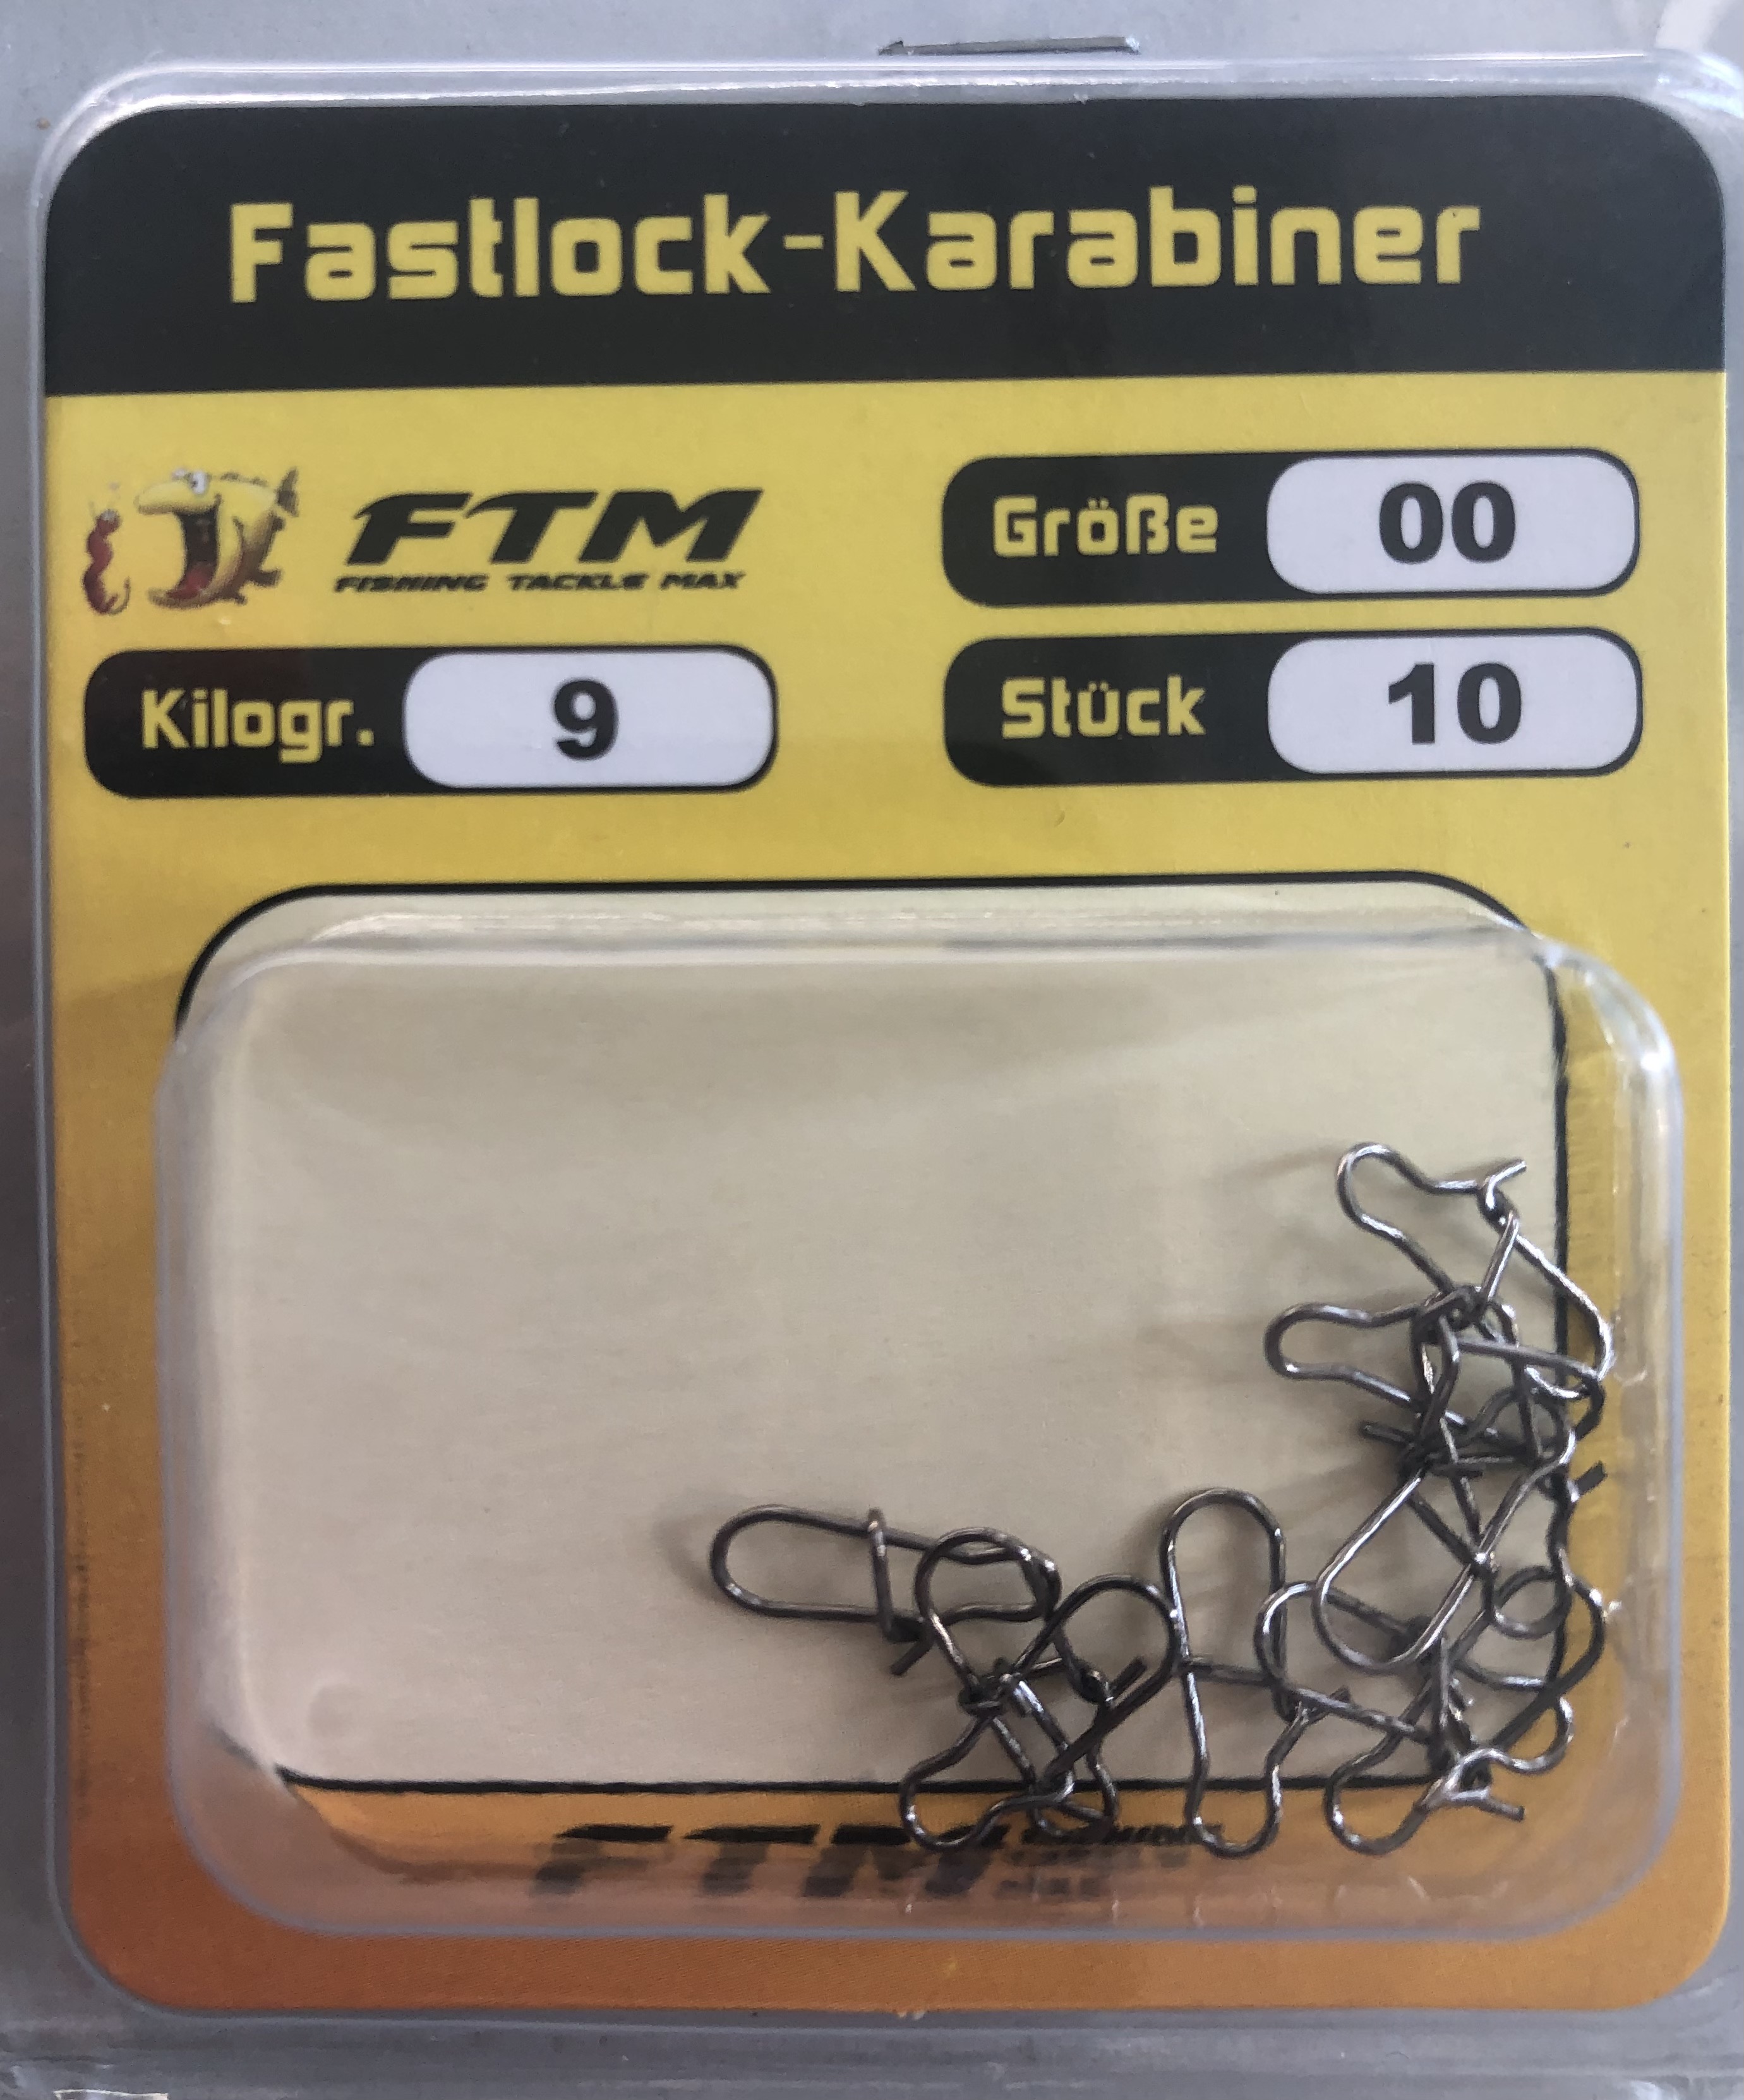 FTM Fastlock-Karabiner